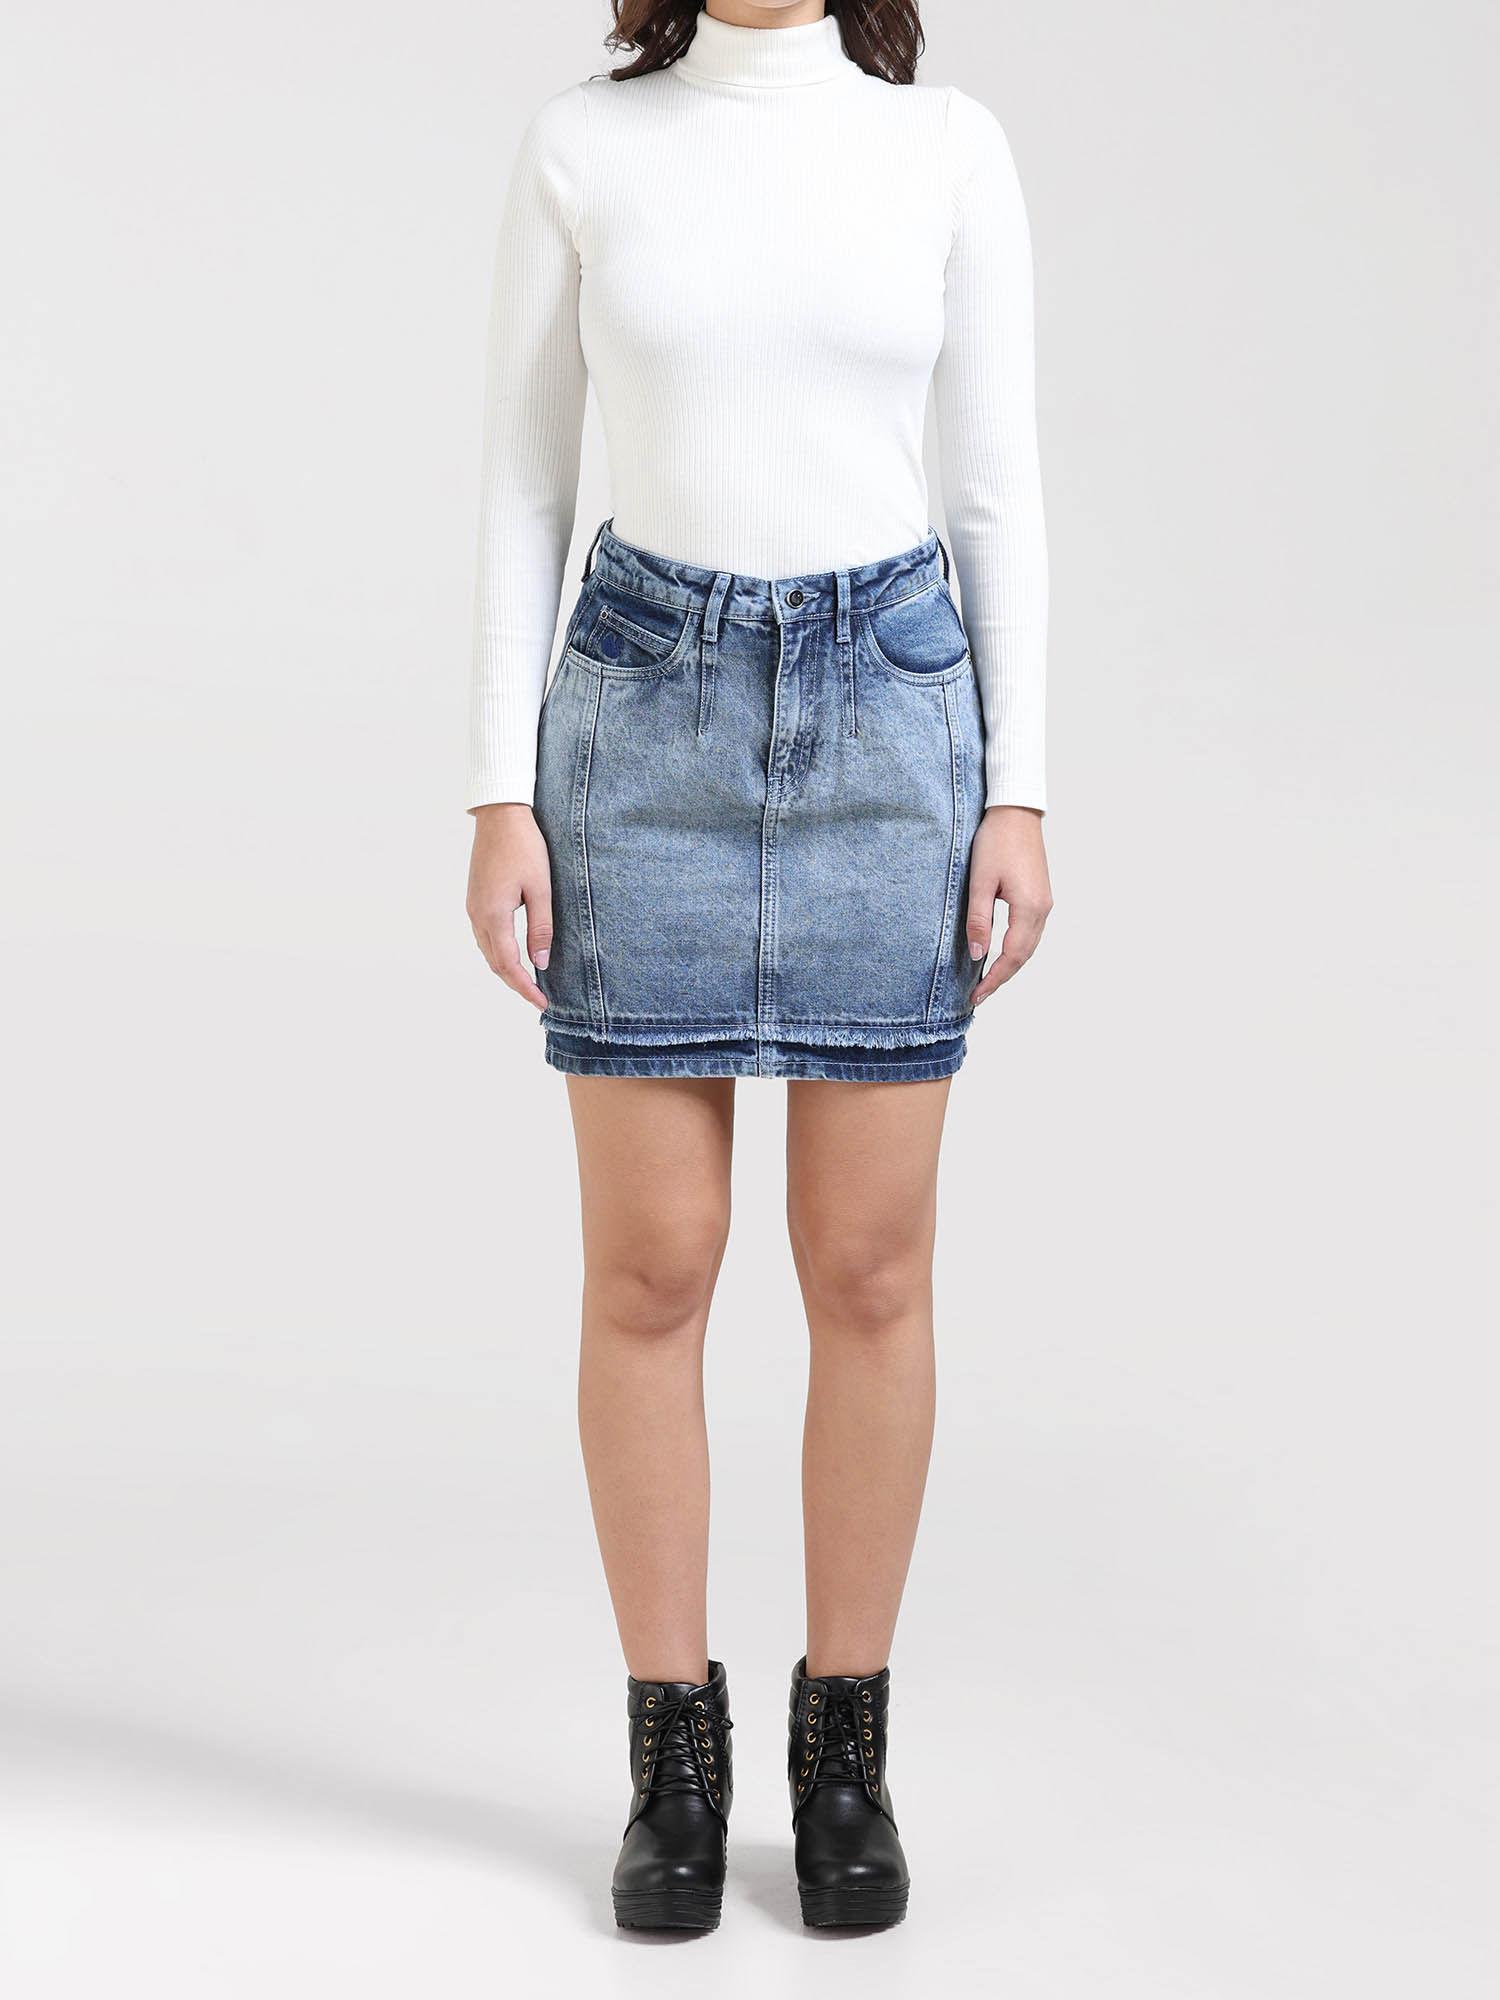 high waist mini denim skirt fitted fit light blue color